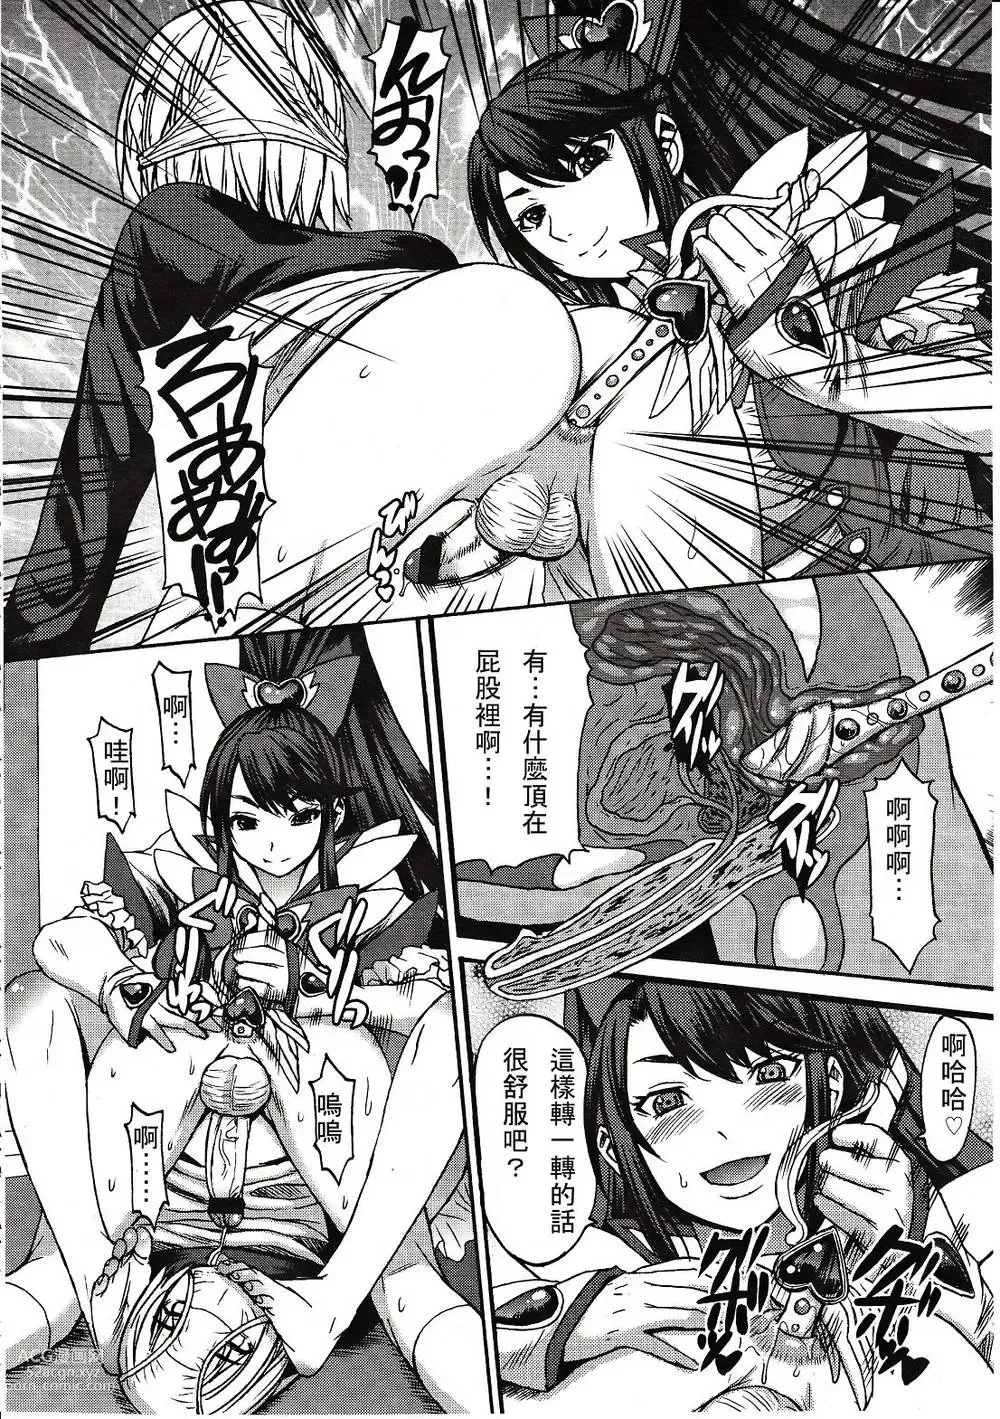 Page 252 of manga Aisarete Miru?